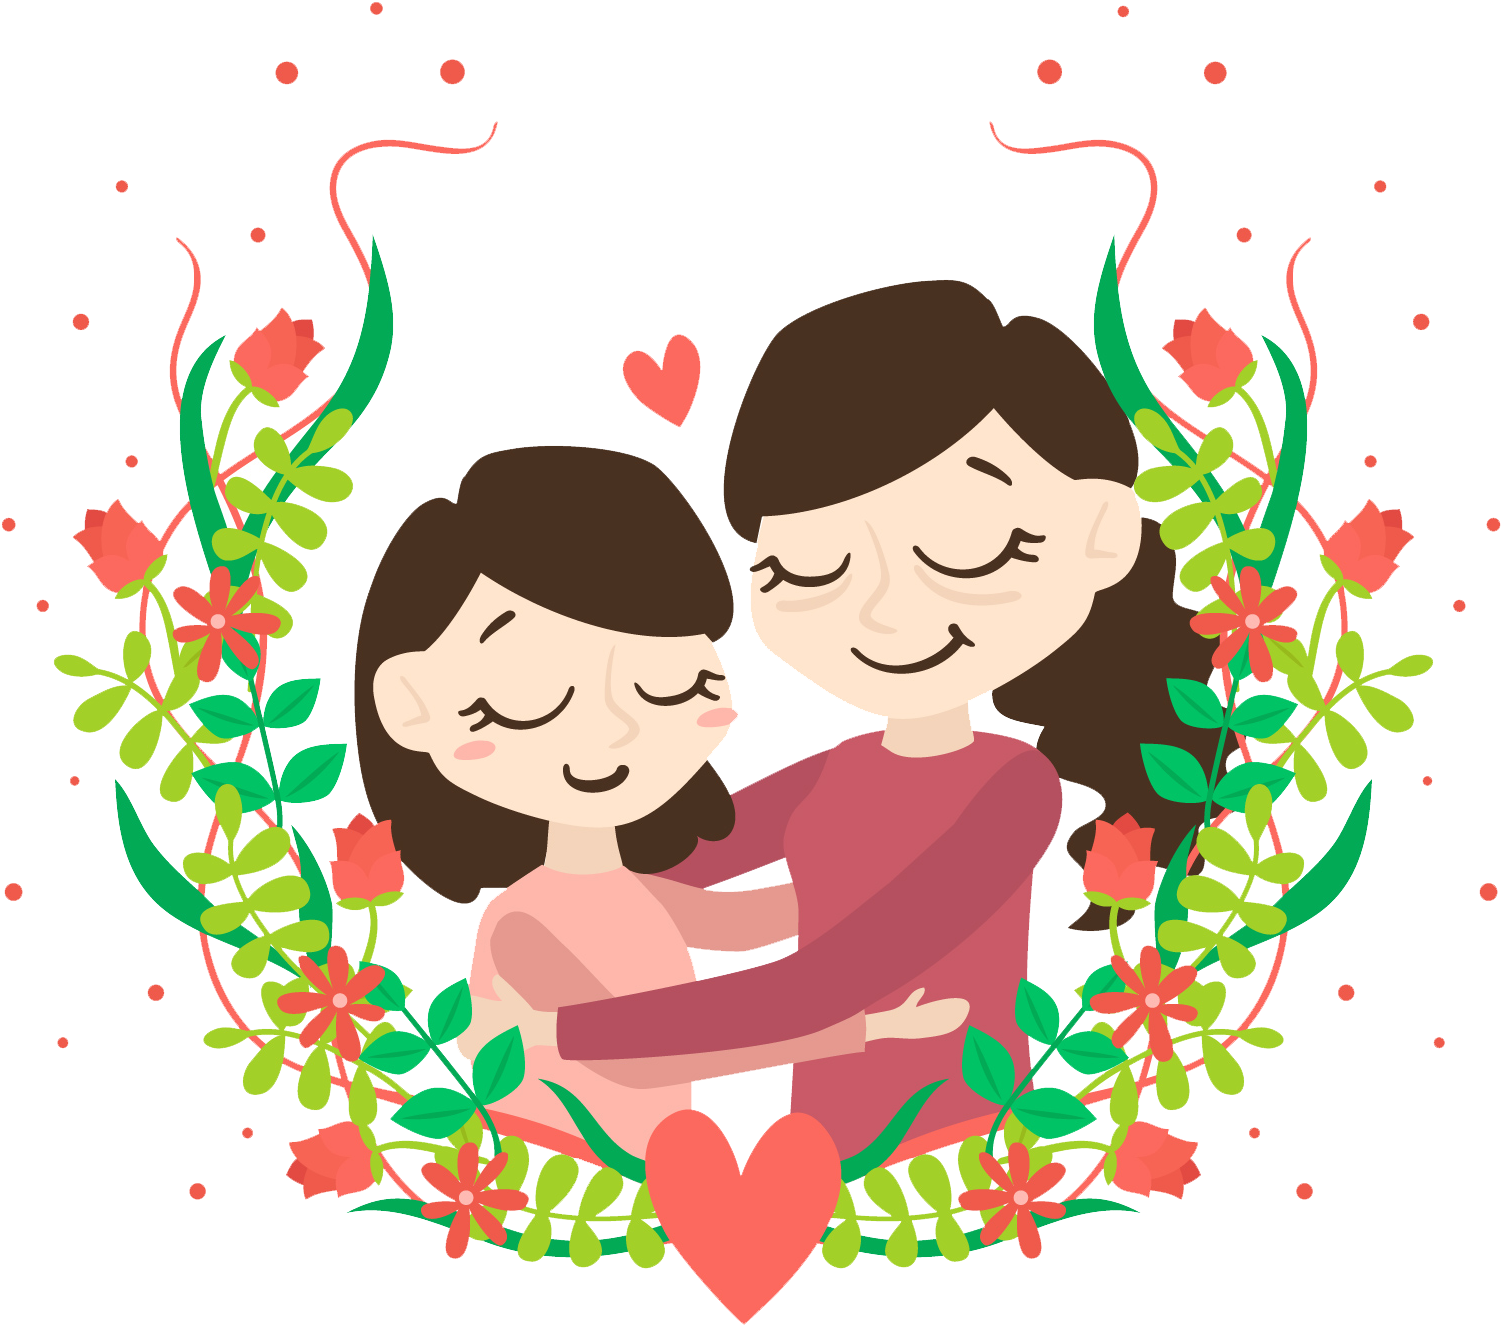 A Cartoon Of Two Women Hugging In A Wreath Of Flowers